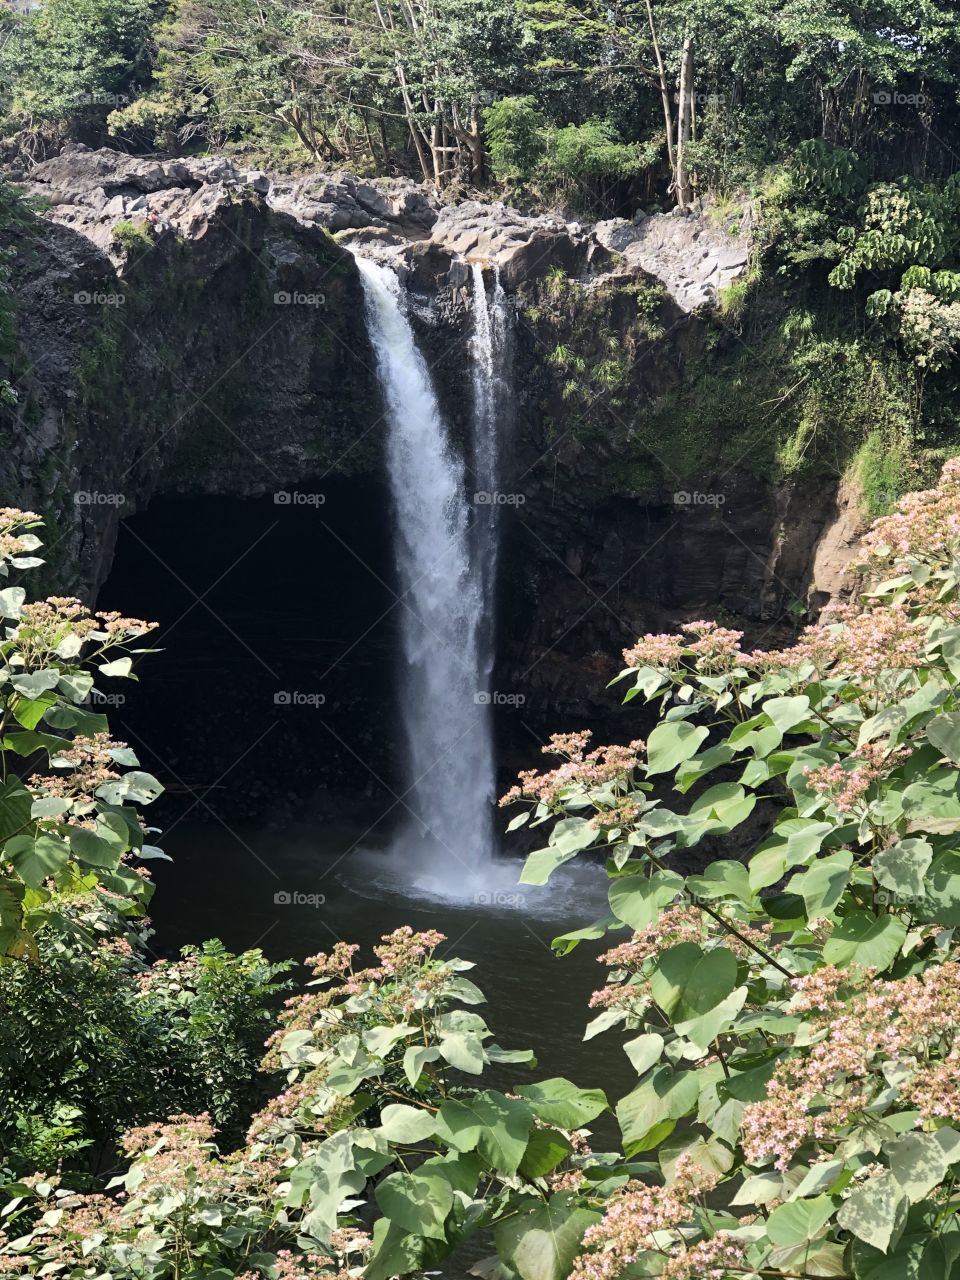 Maui, Hawaii waterfall 